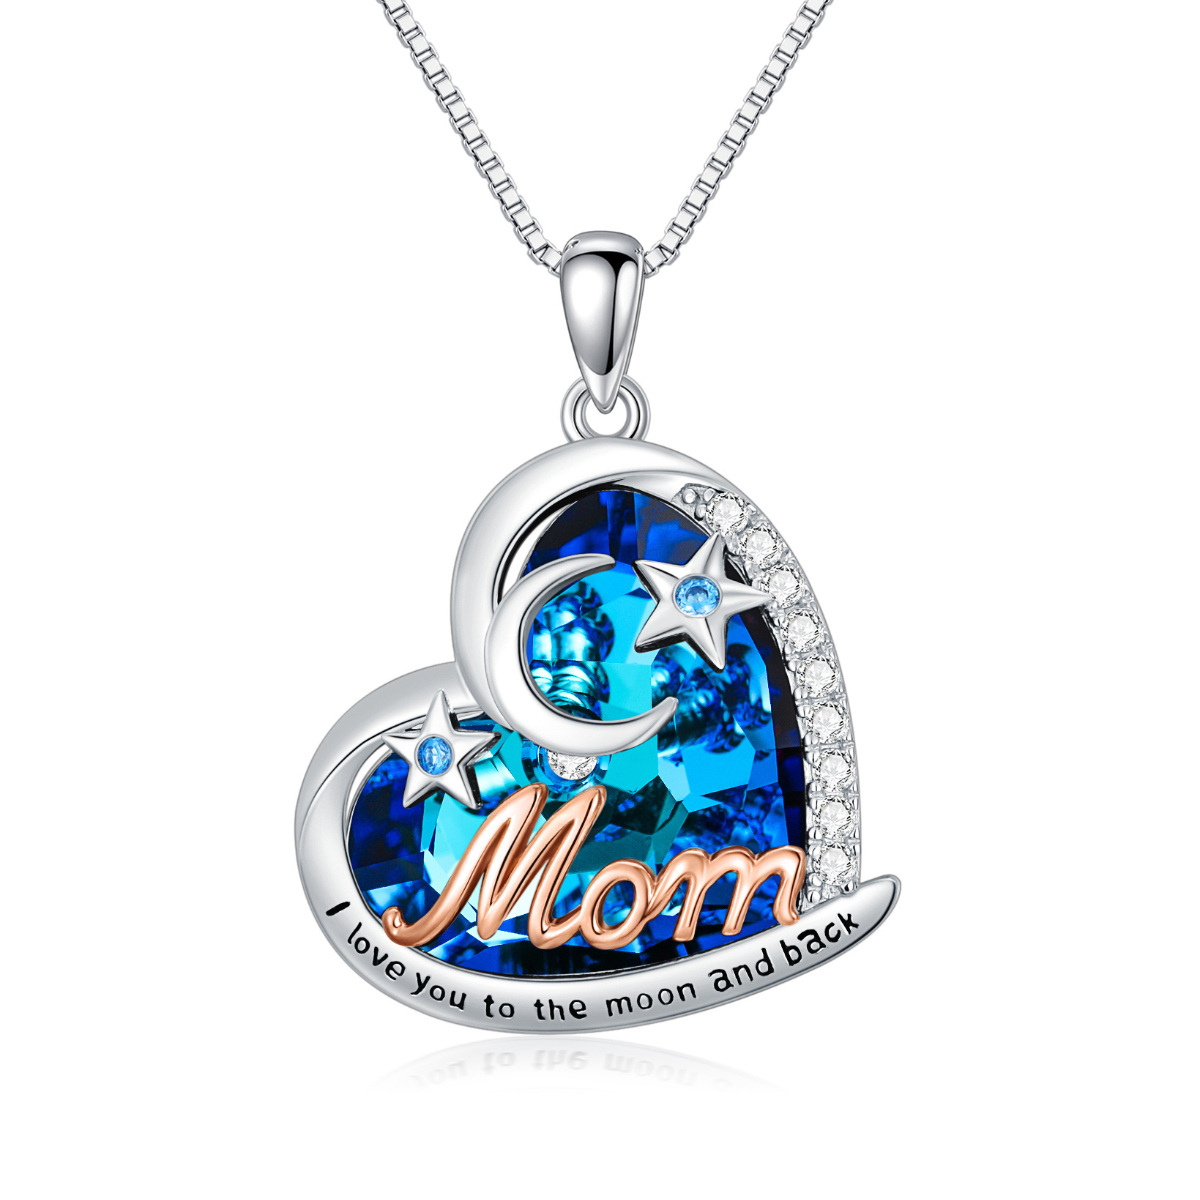 Collier en argent sterling avec pendentif pentagramme en forme de coeur en cristal Mother Heart & Moon-1